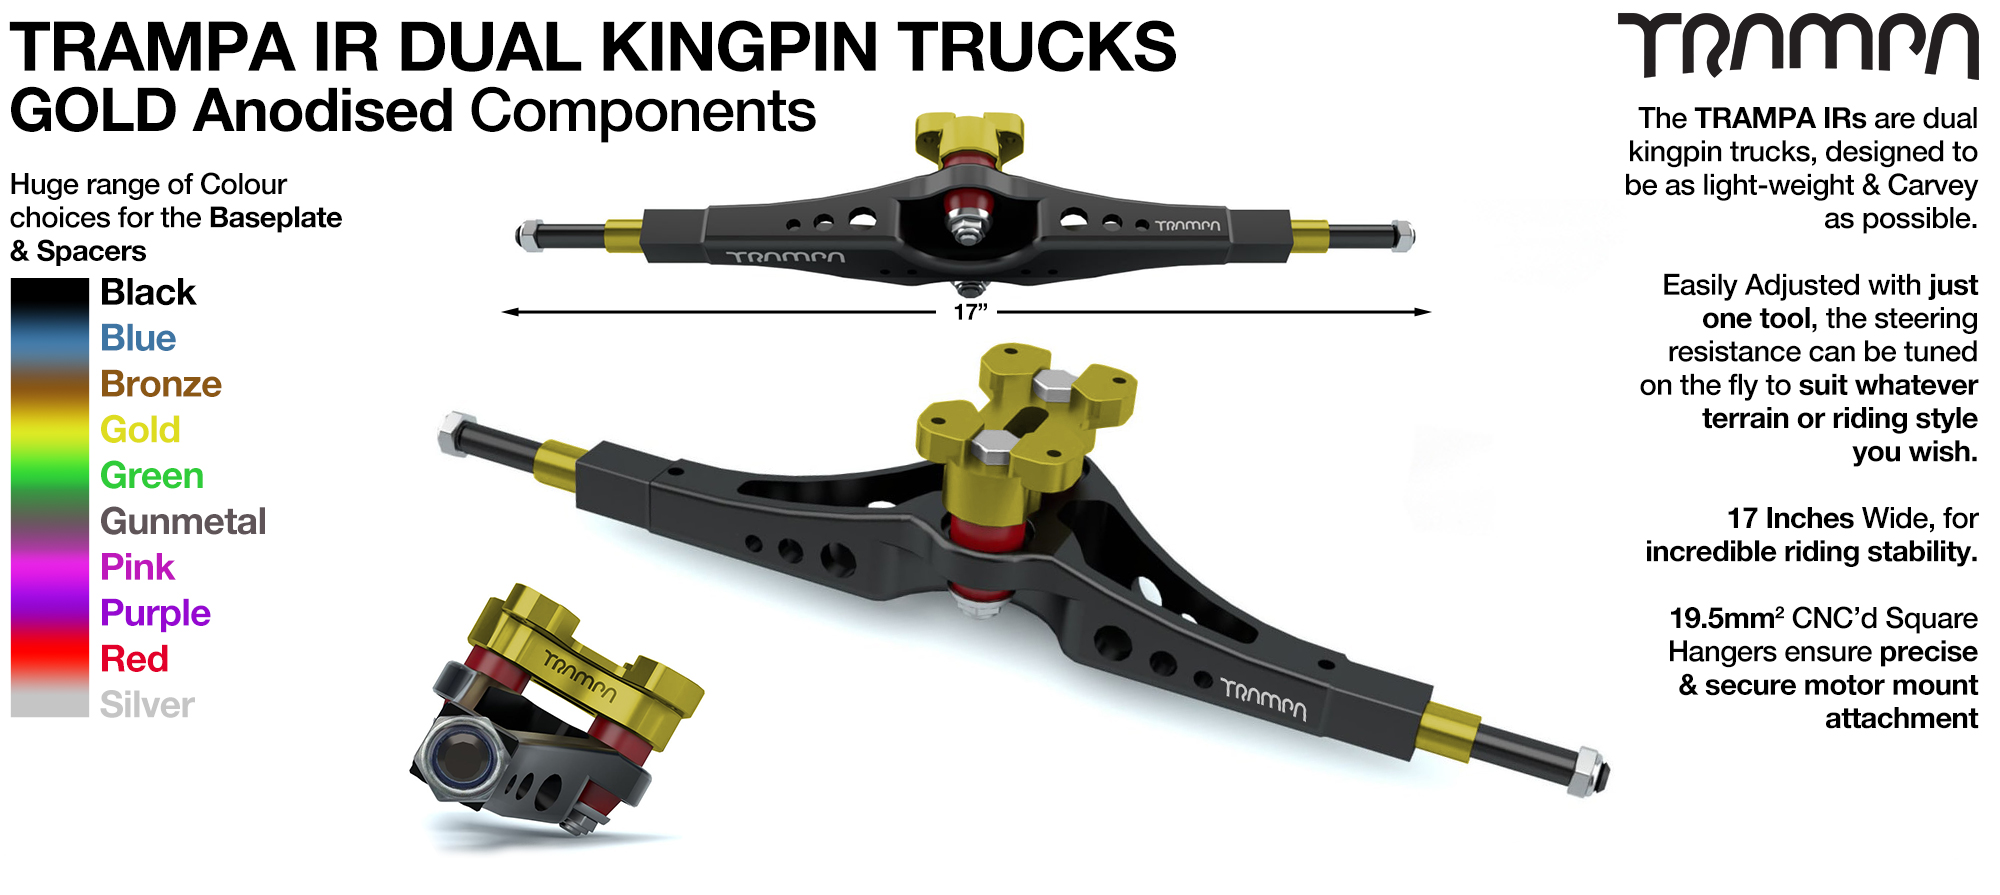 TRAMPA IR Double Kingpinned Skate Style Trucks fit every 19.1mm Motor Mount TRAMPA offers - GOLD